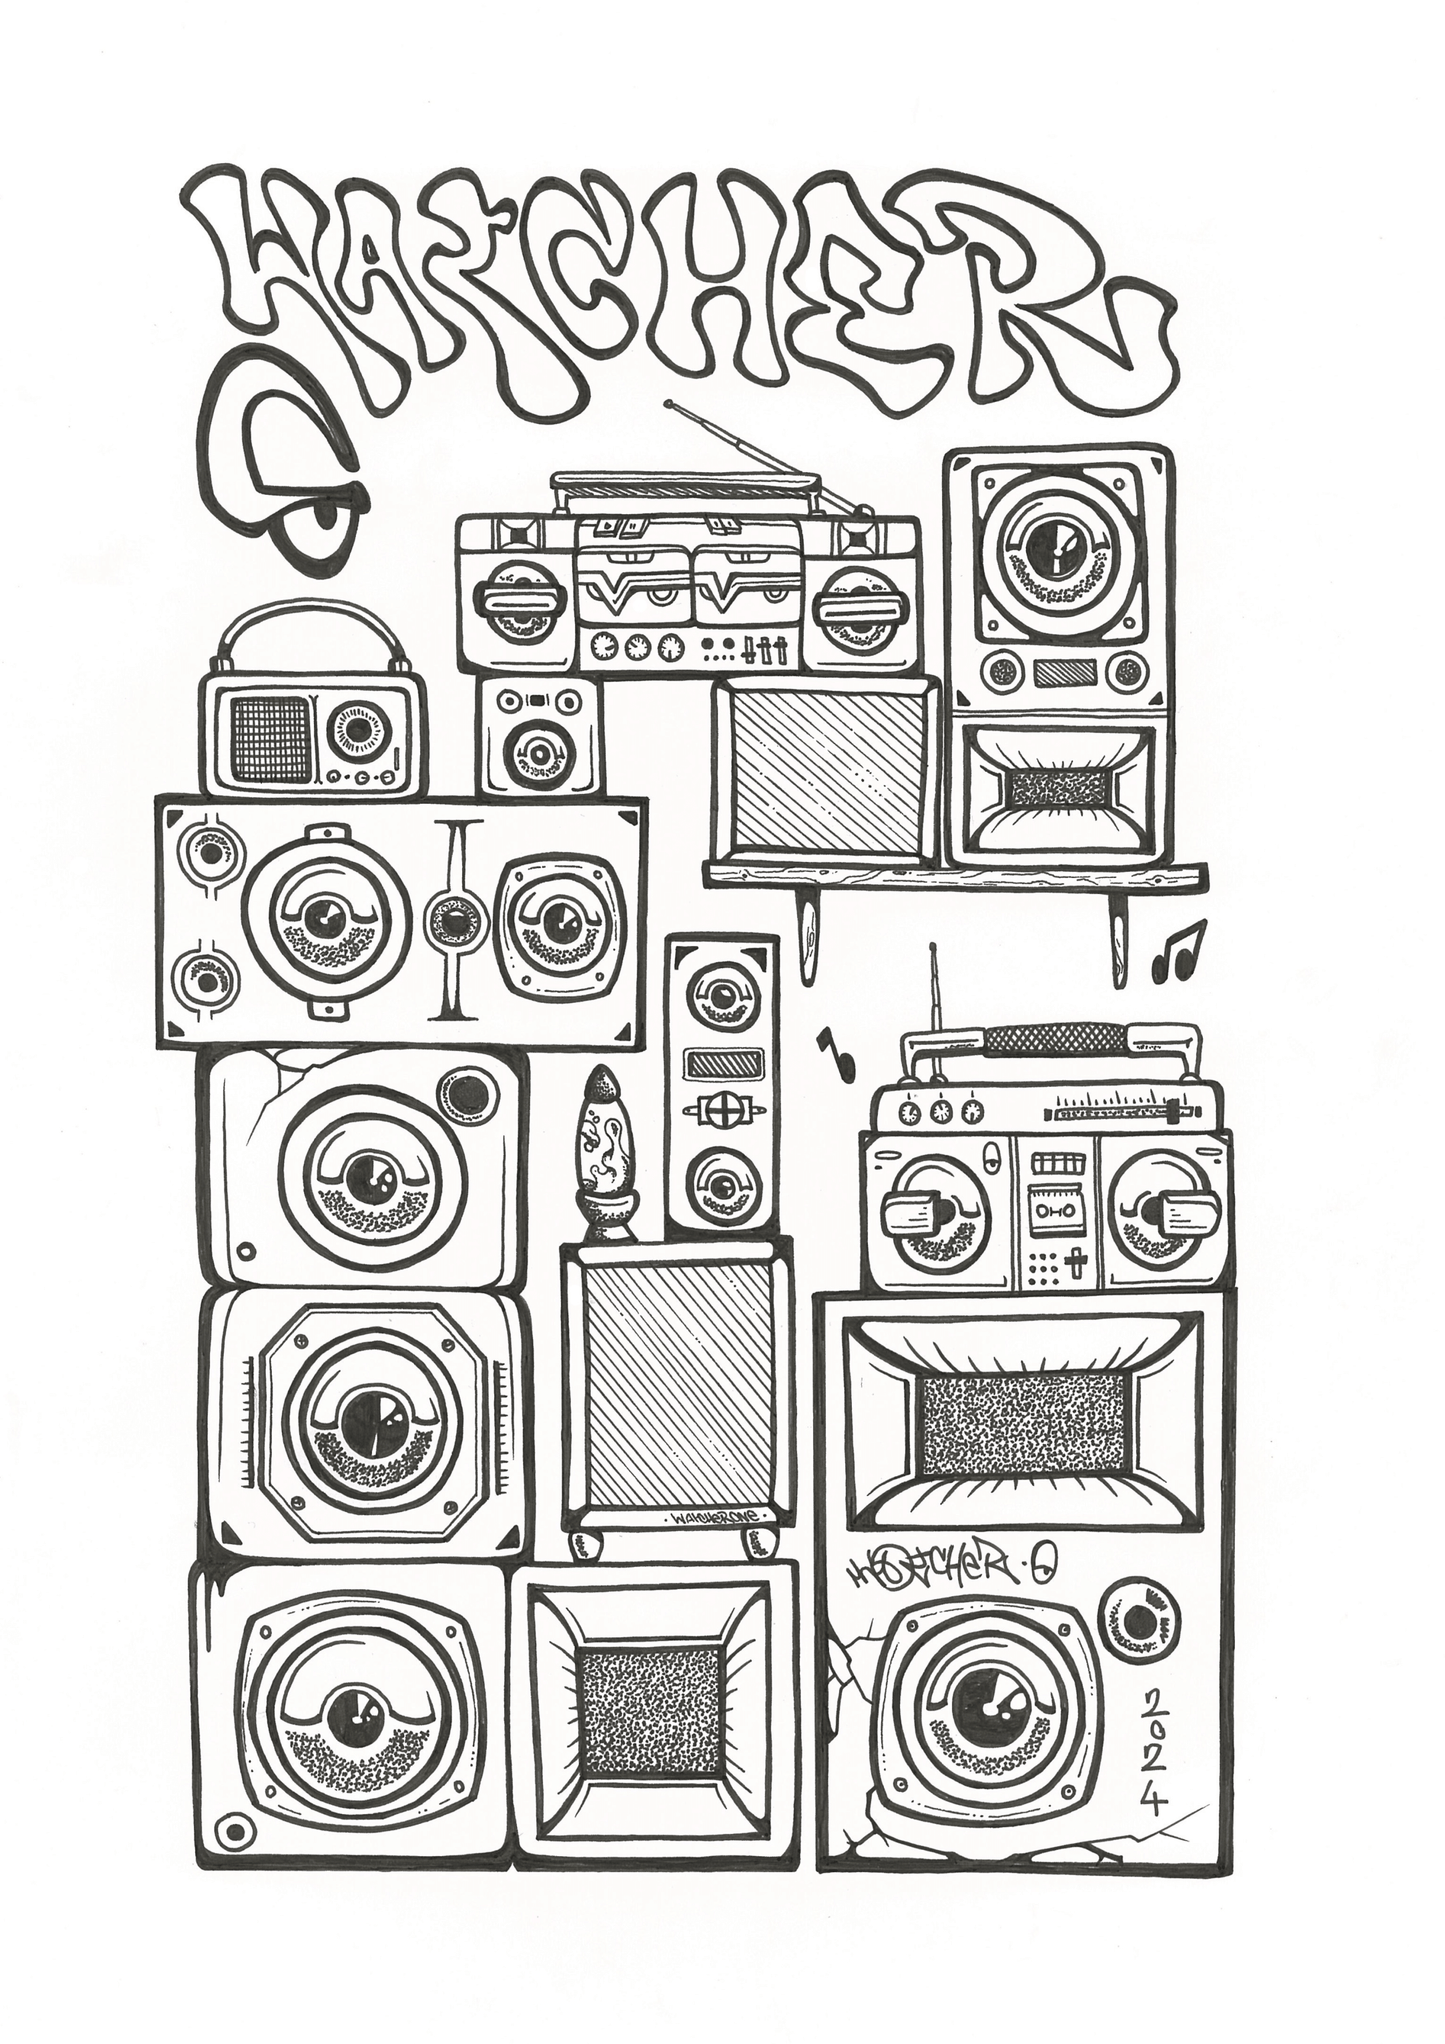 Stacked speakers illustration